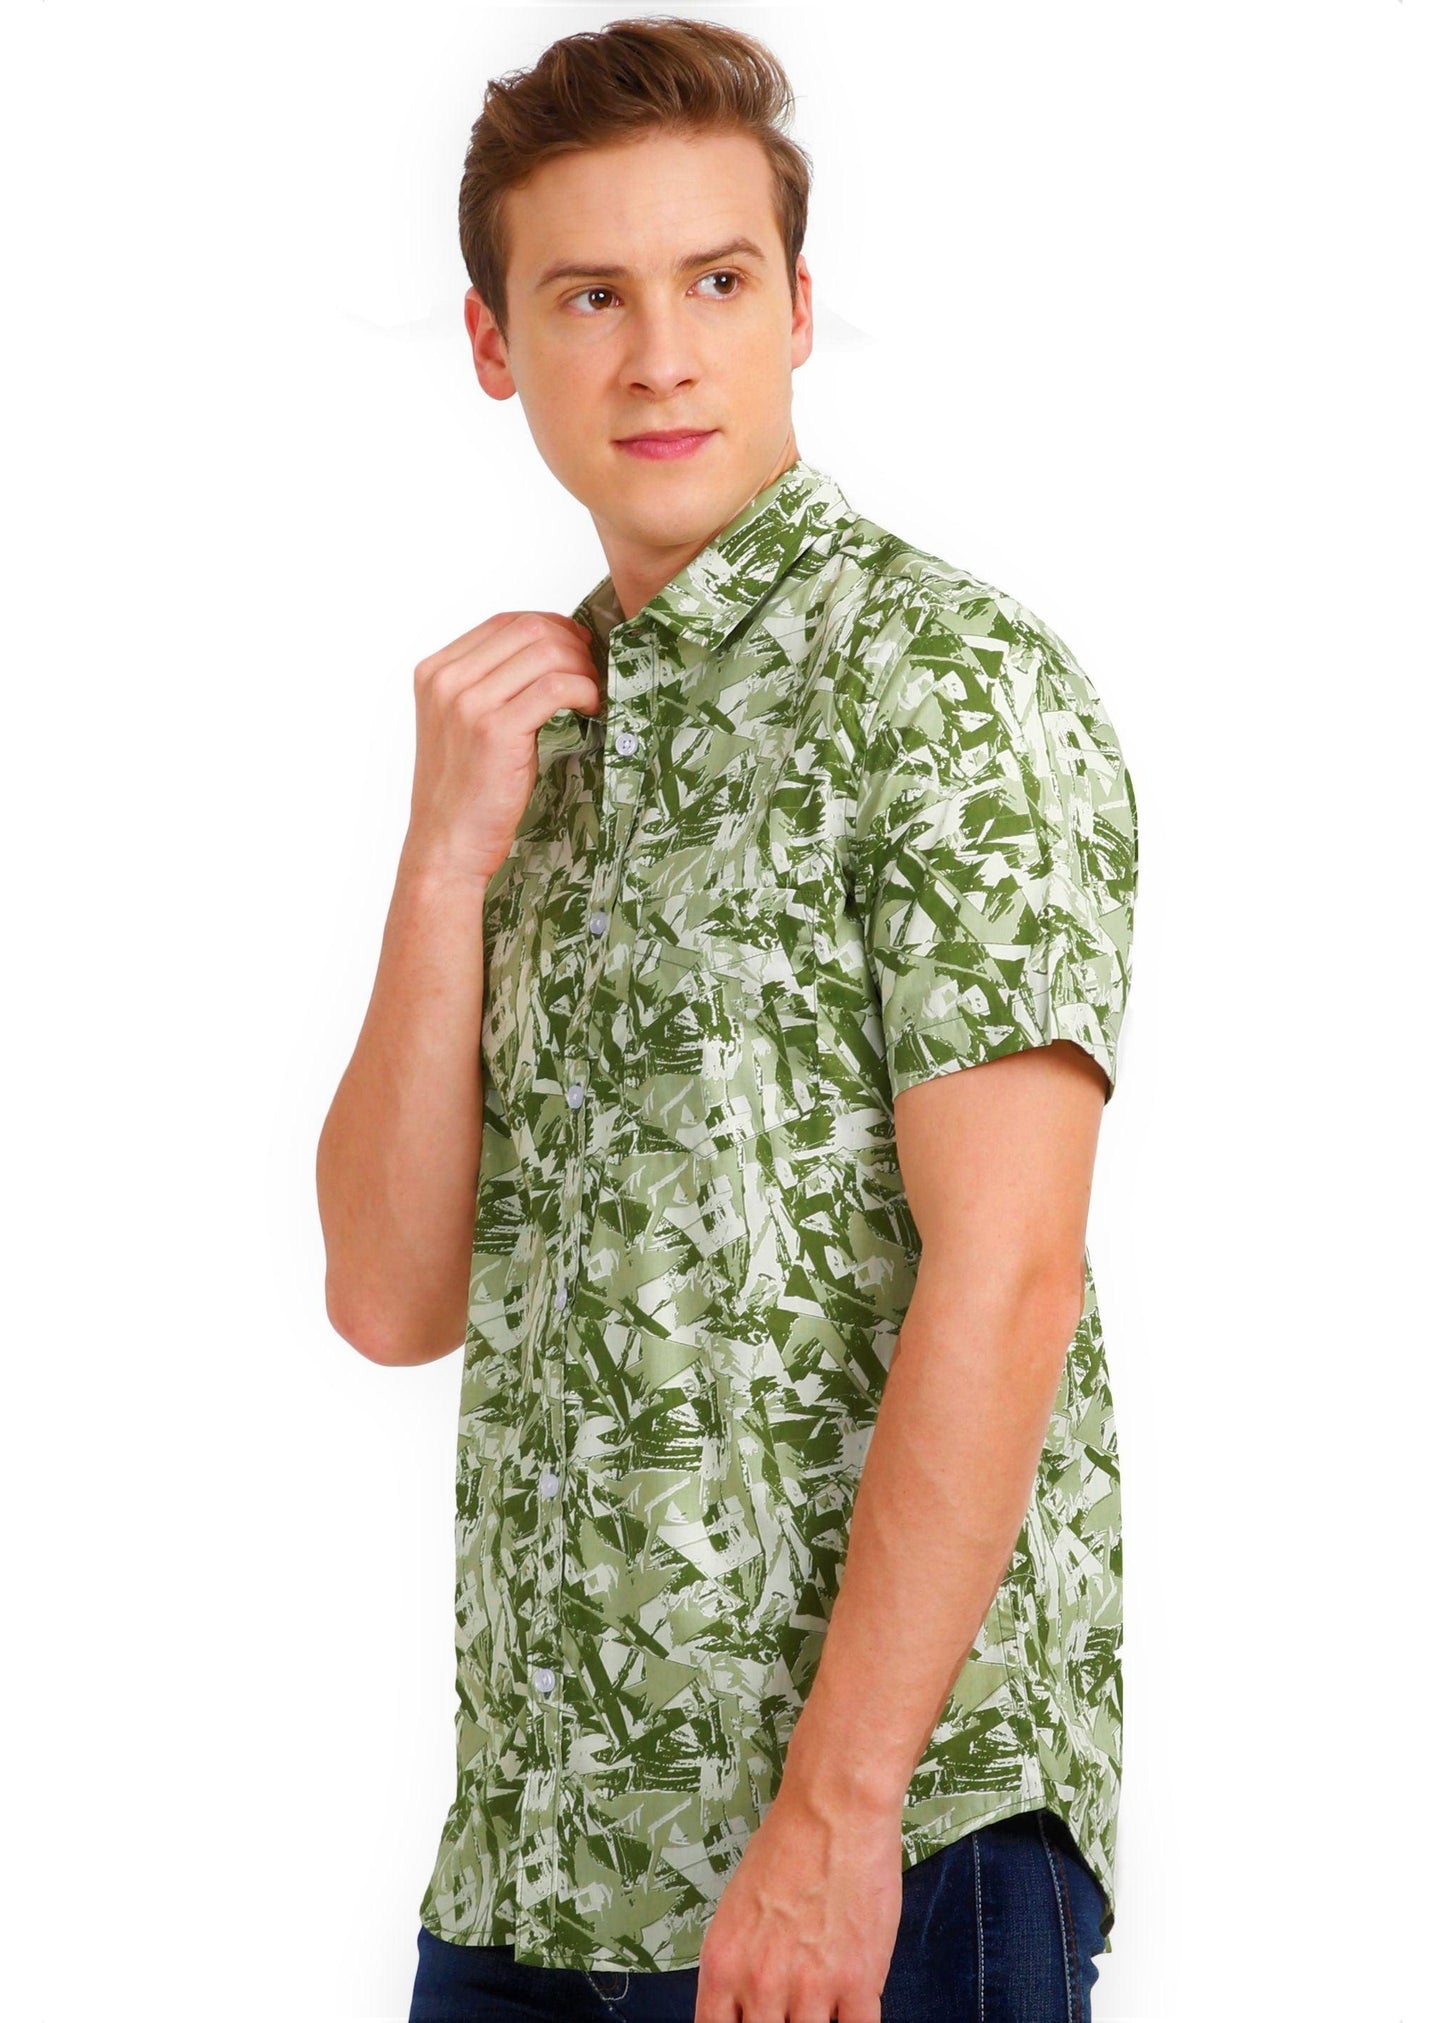 Tusok-mojitoVacation-Printed Shirtimage-Green Zigzag (2)